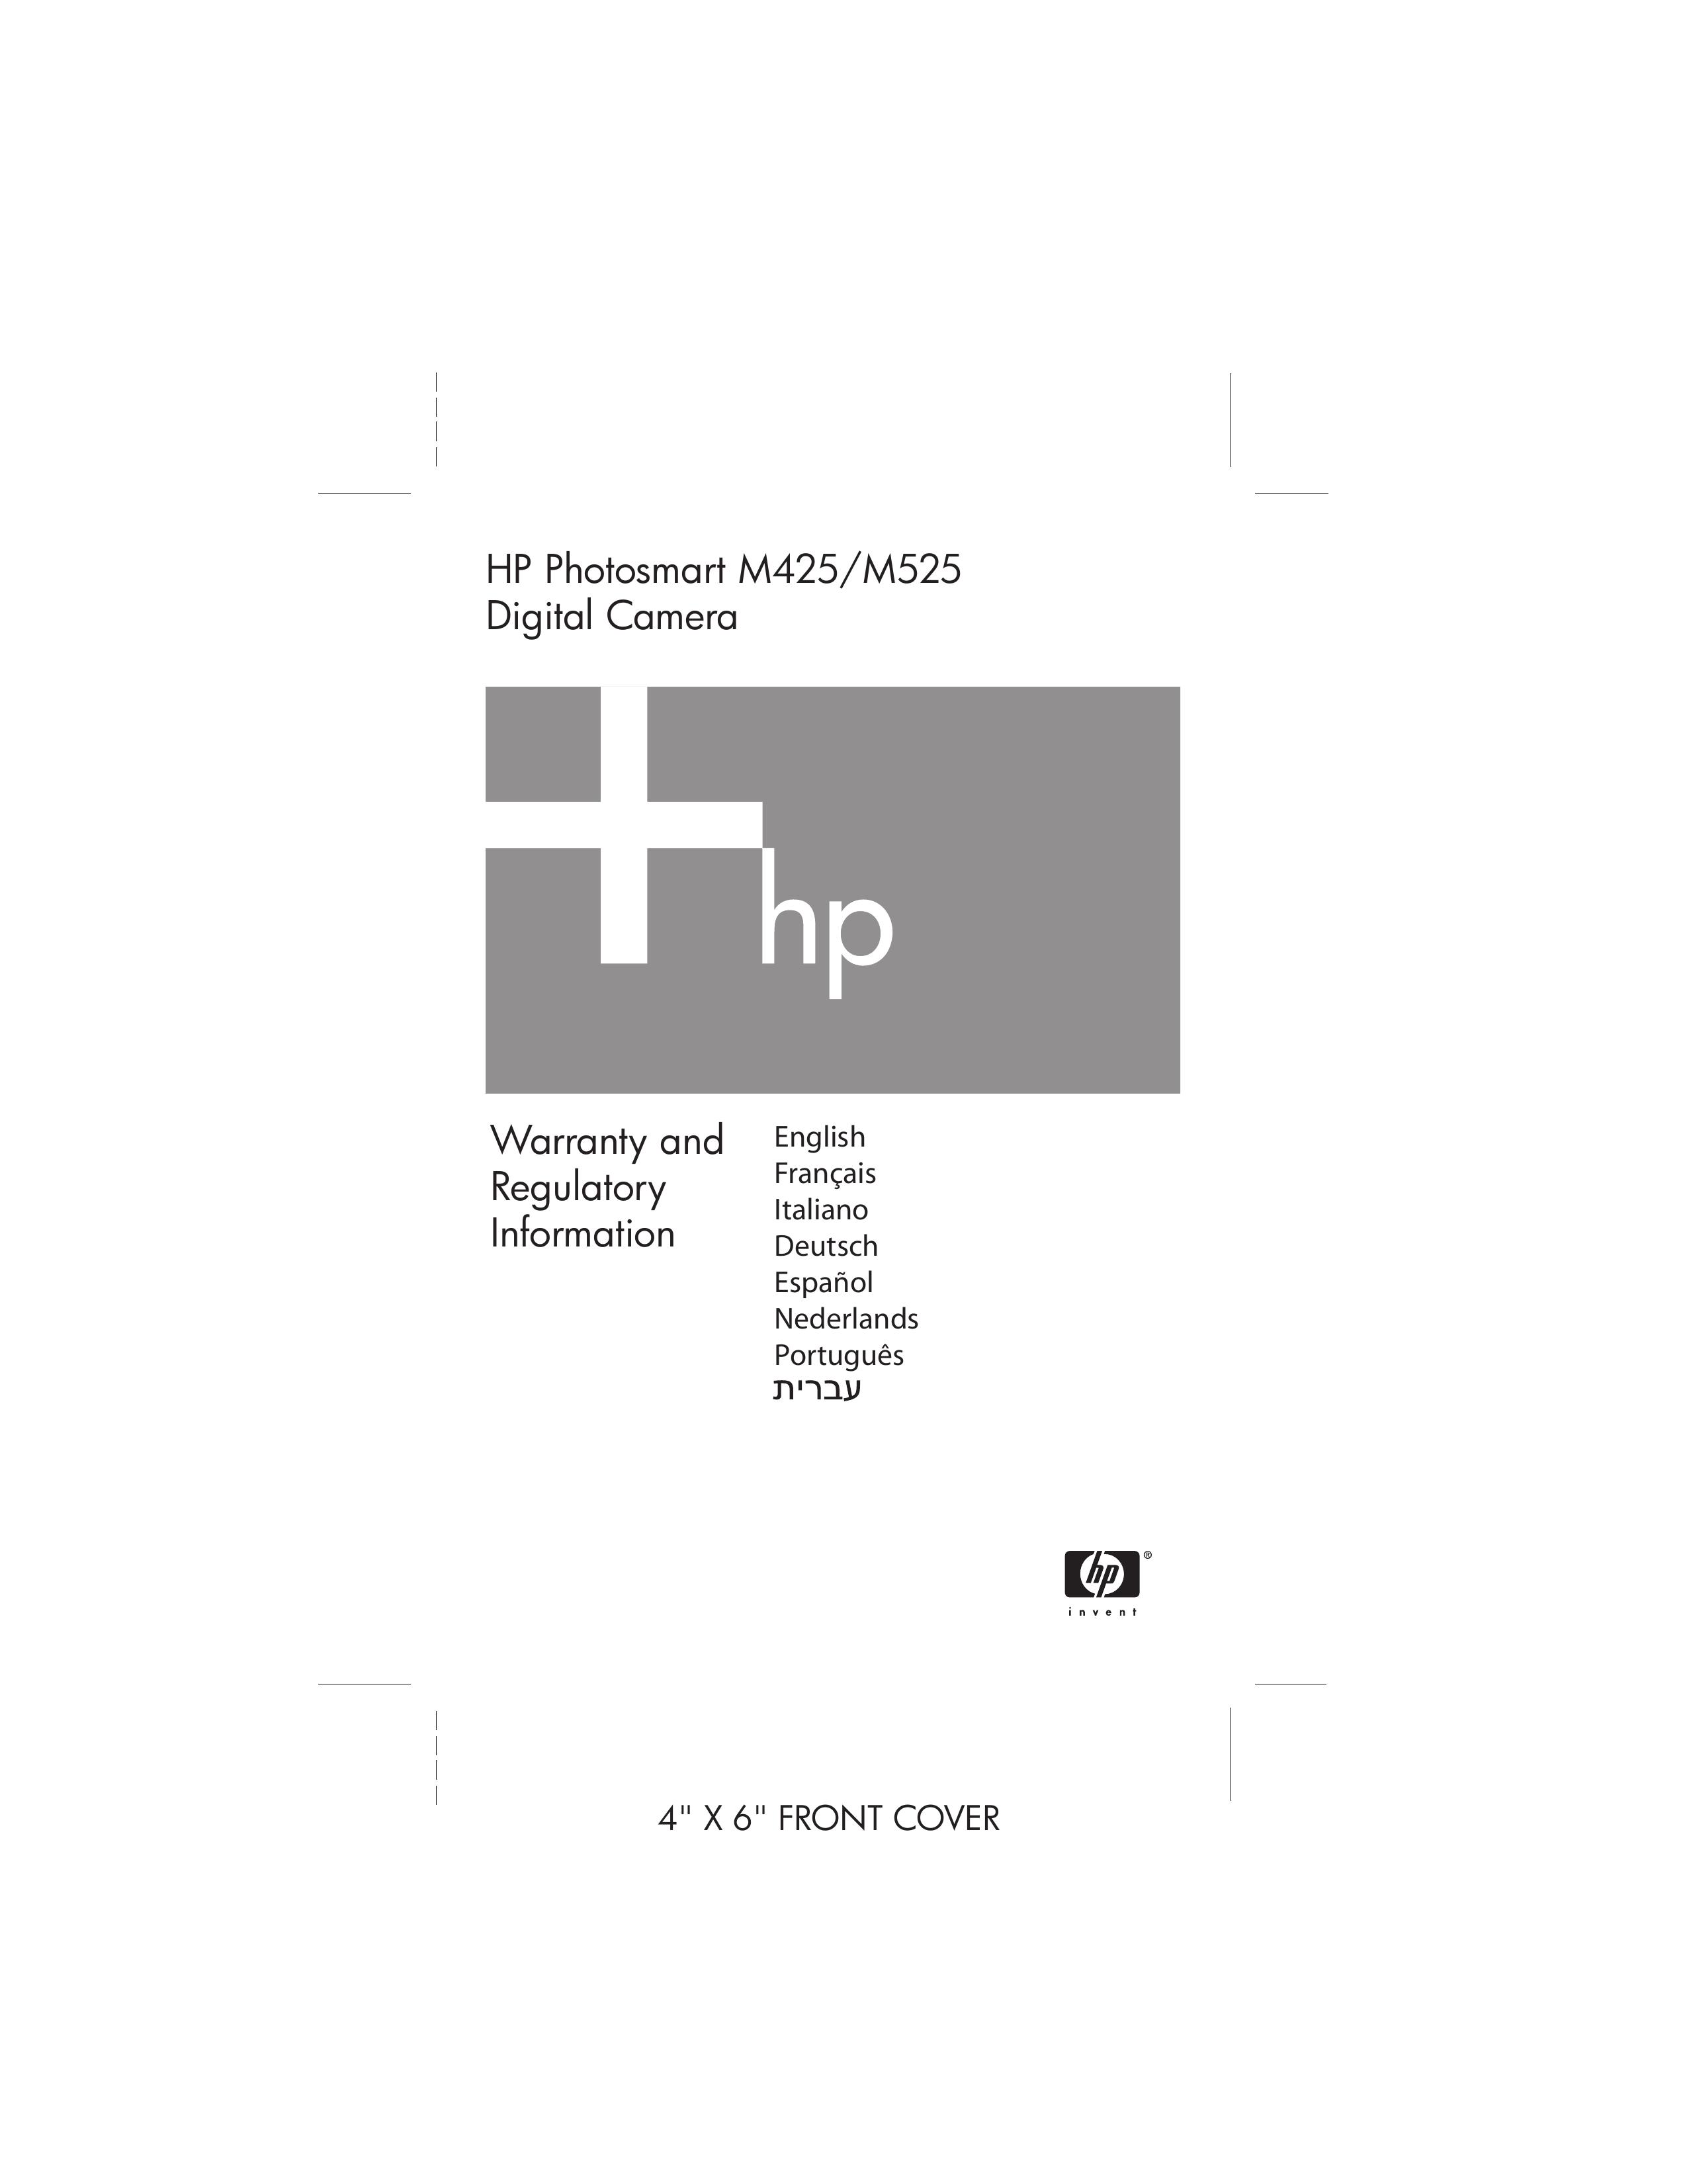 HP (Hewlett-Packard) M425 Camcorder User Manual